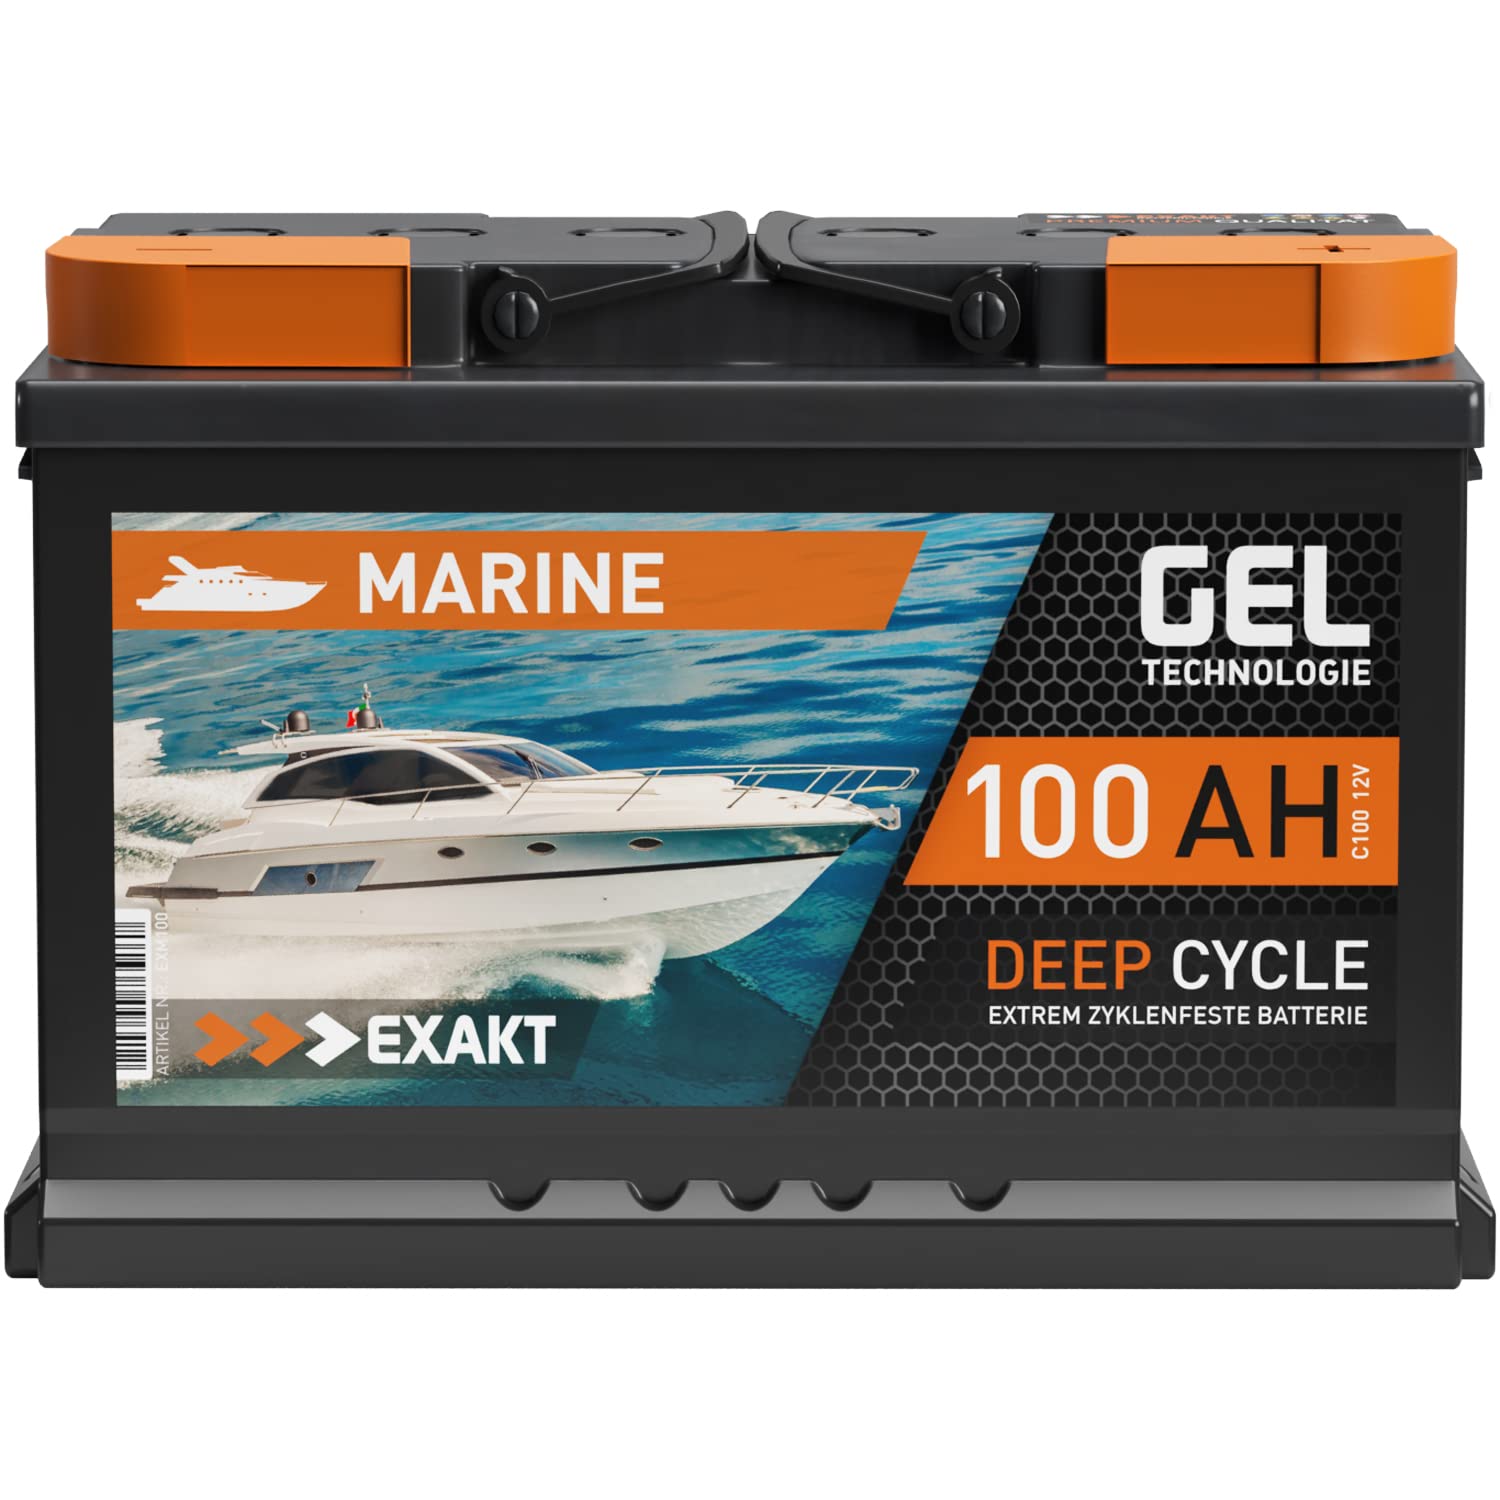 EXAKT GEL Batterie 12V 100Ah Bootsbatterie Marine Schiff Versorgung Solarbatterie Gelbatterie Gel Akku ersetzt 80Ah 90Ah von Exakt